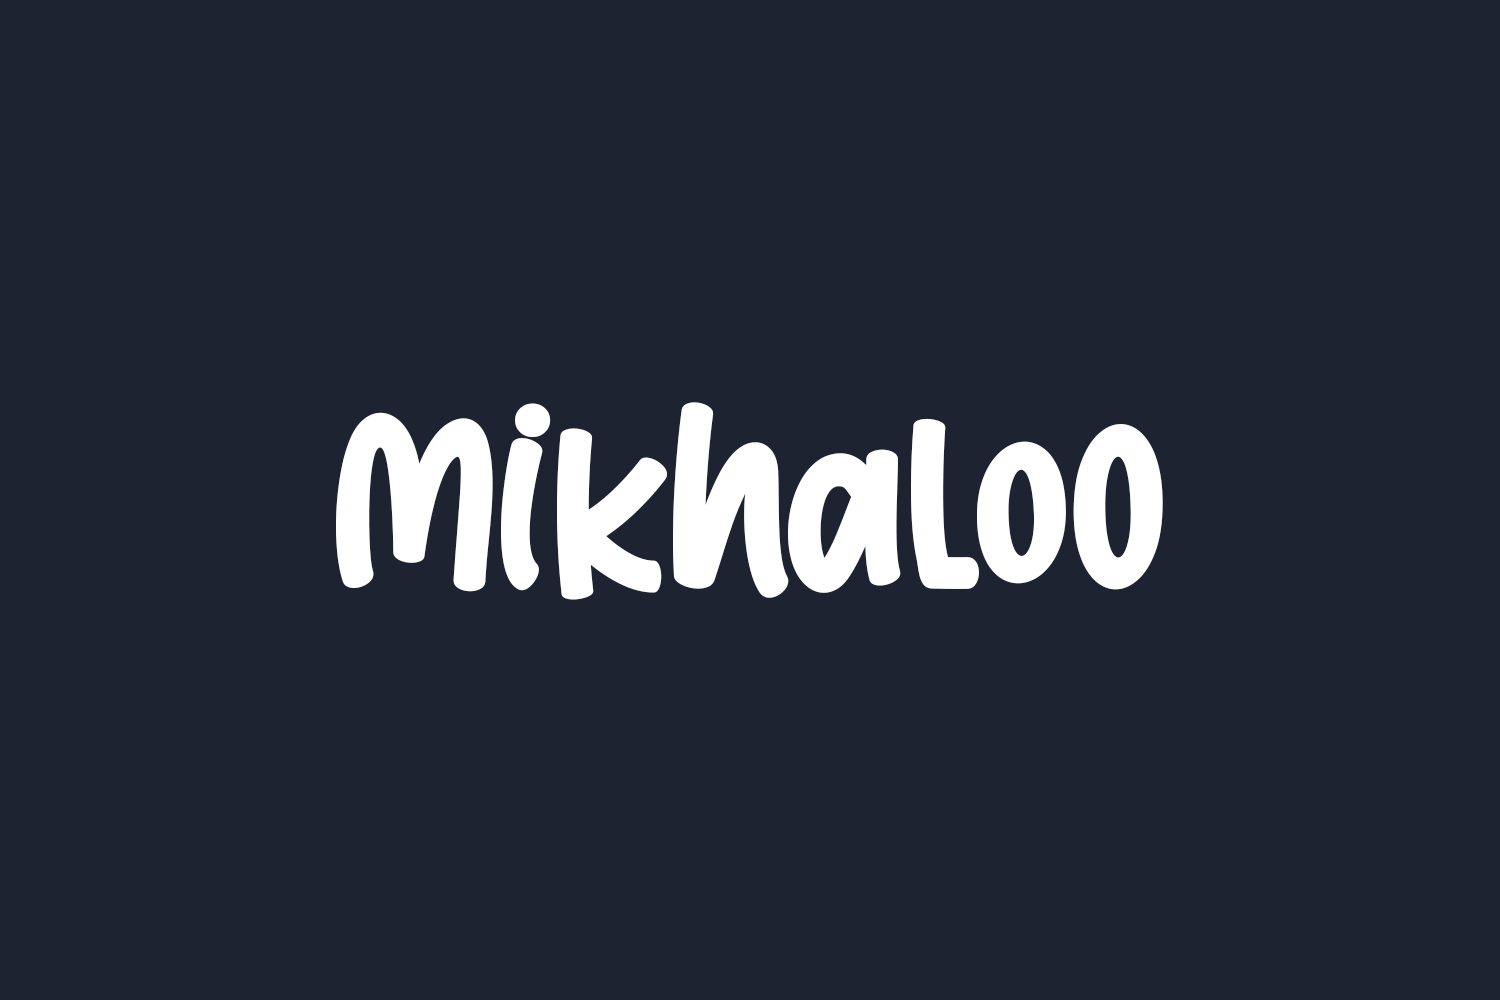 Free Mikhaloo Font